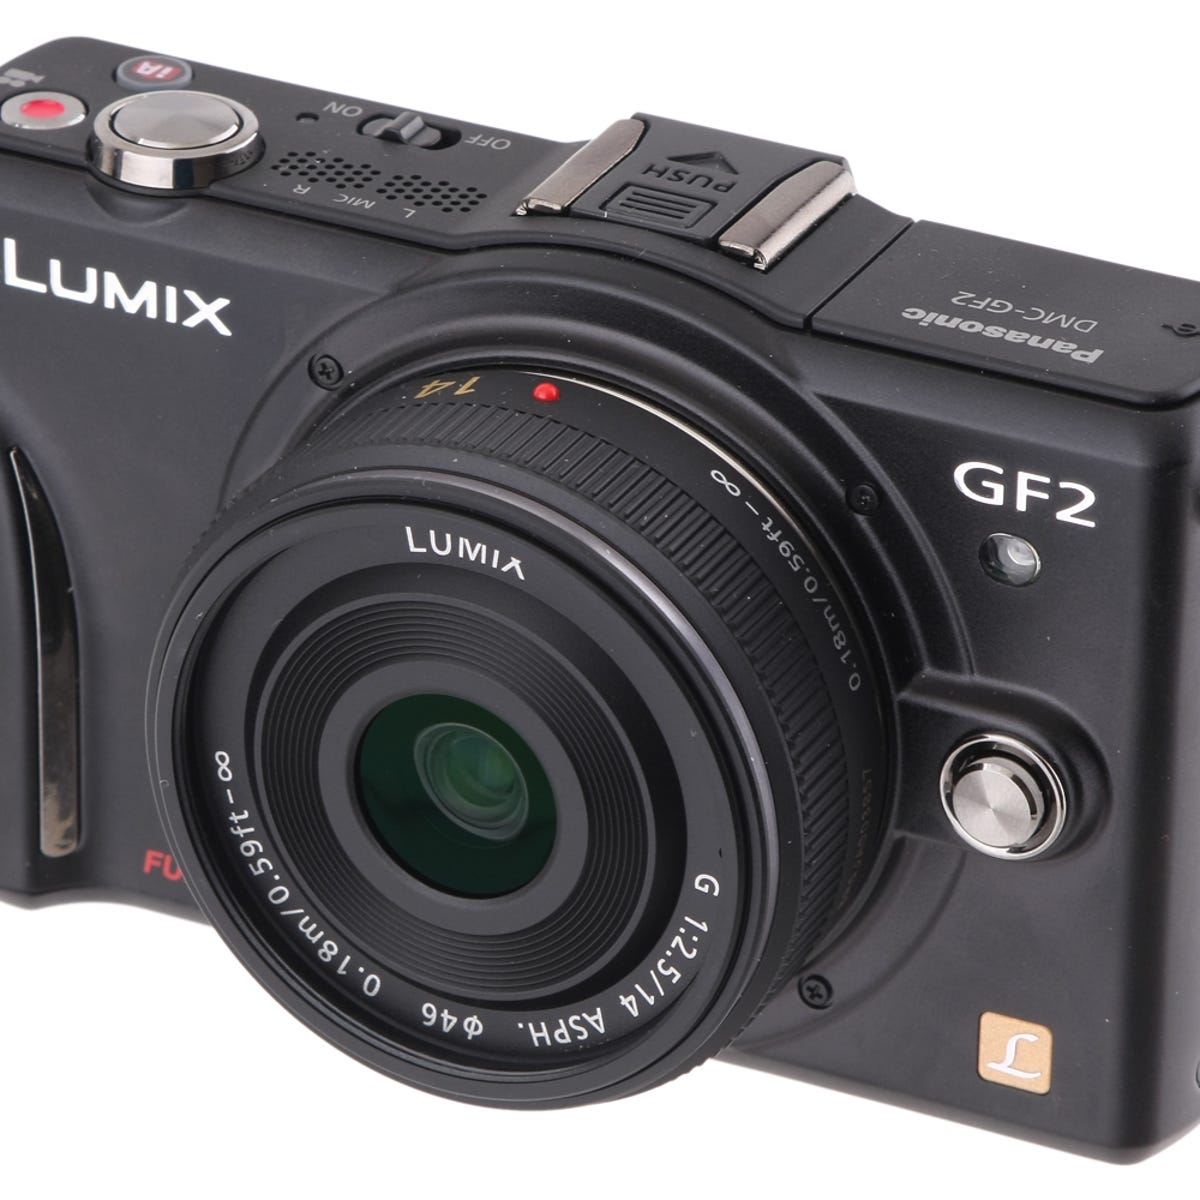 Panasonic Lumix DMC-GF2 review